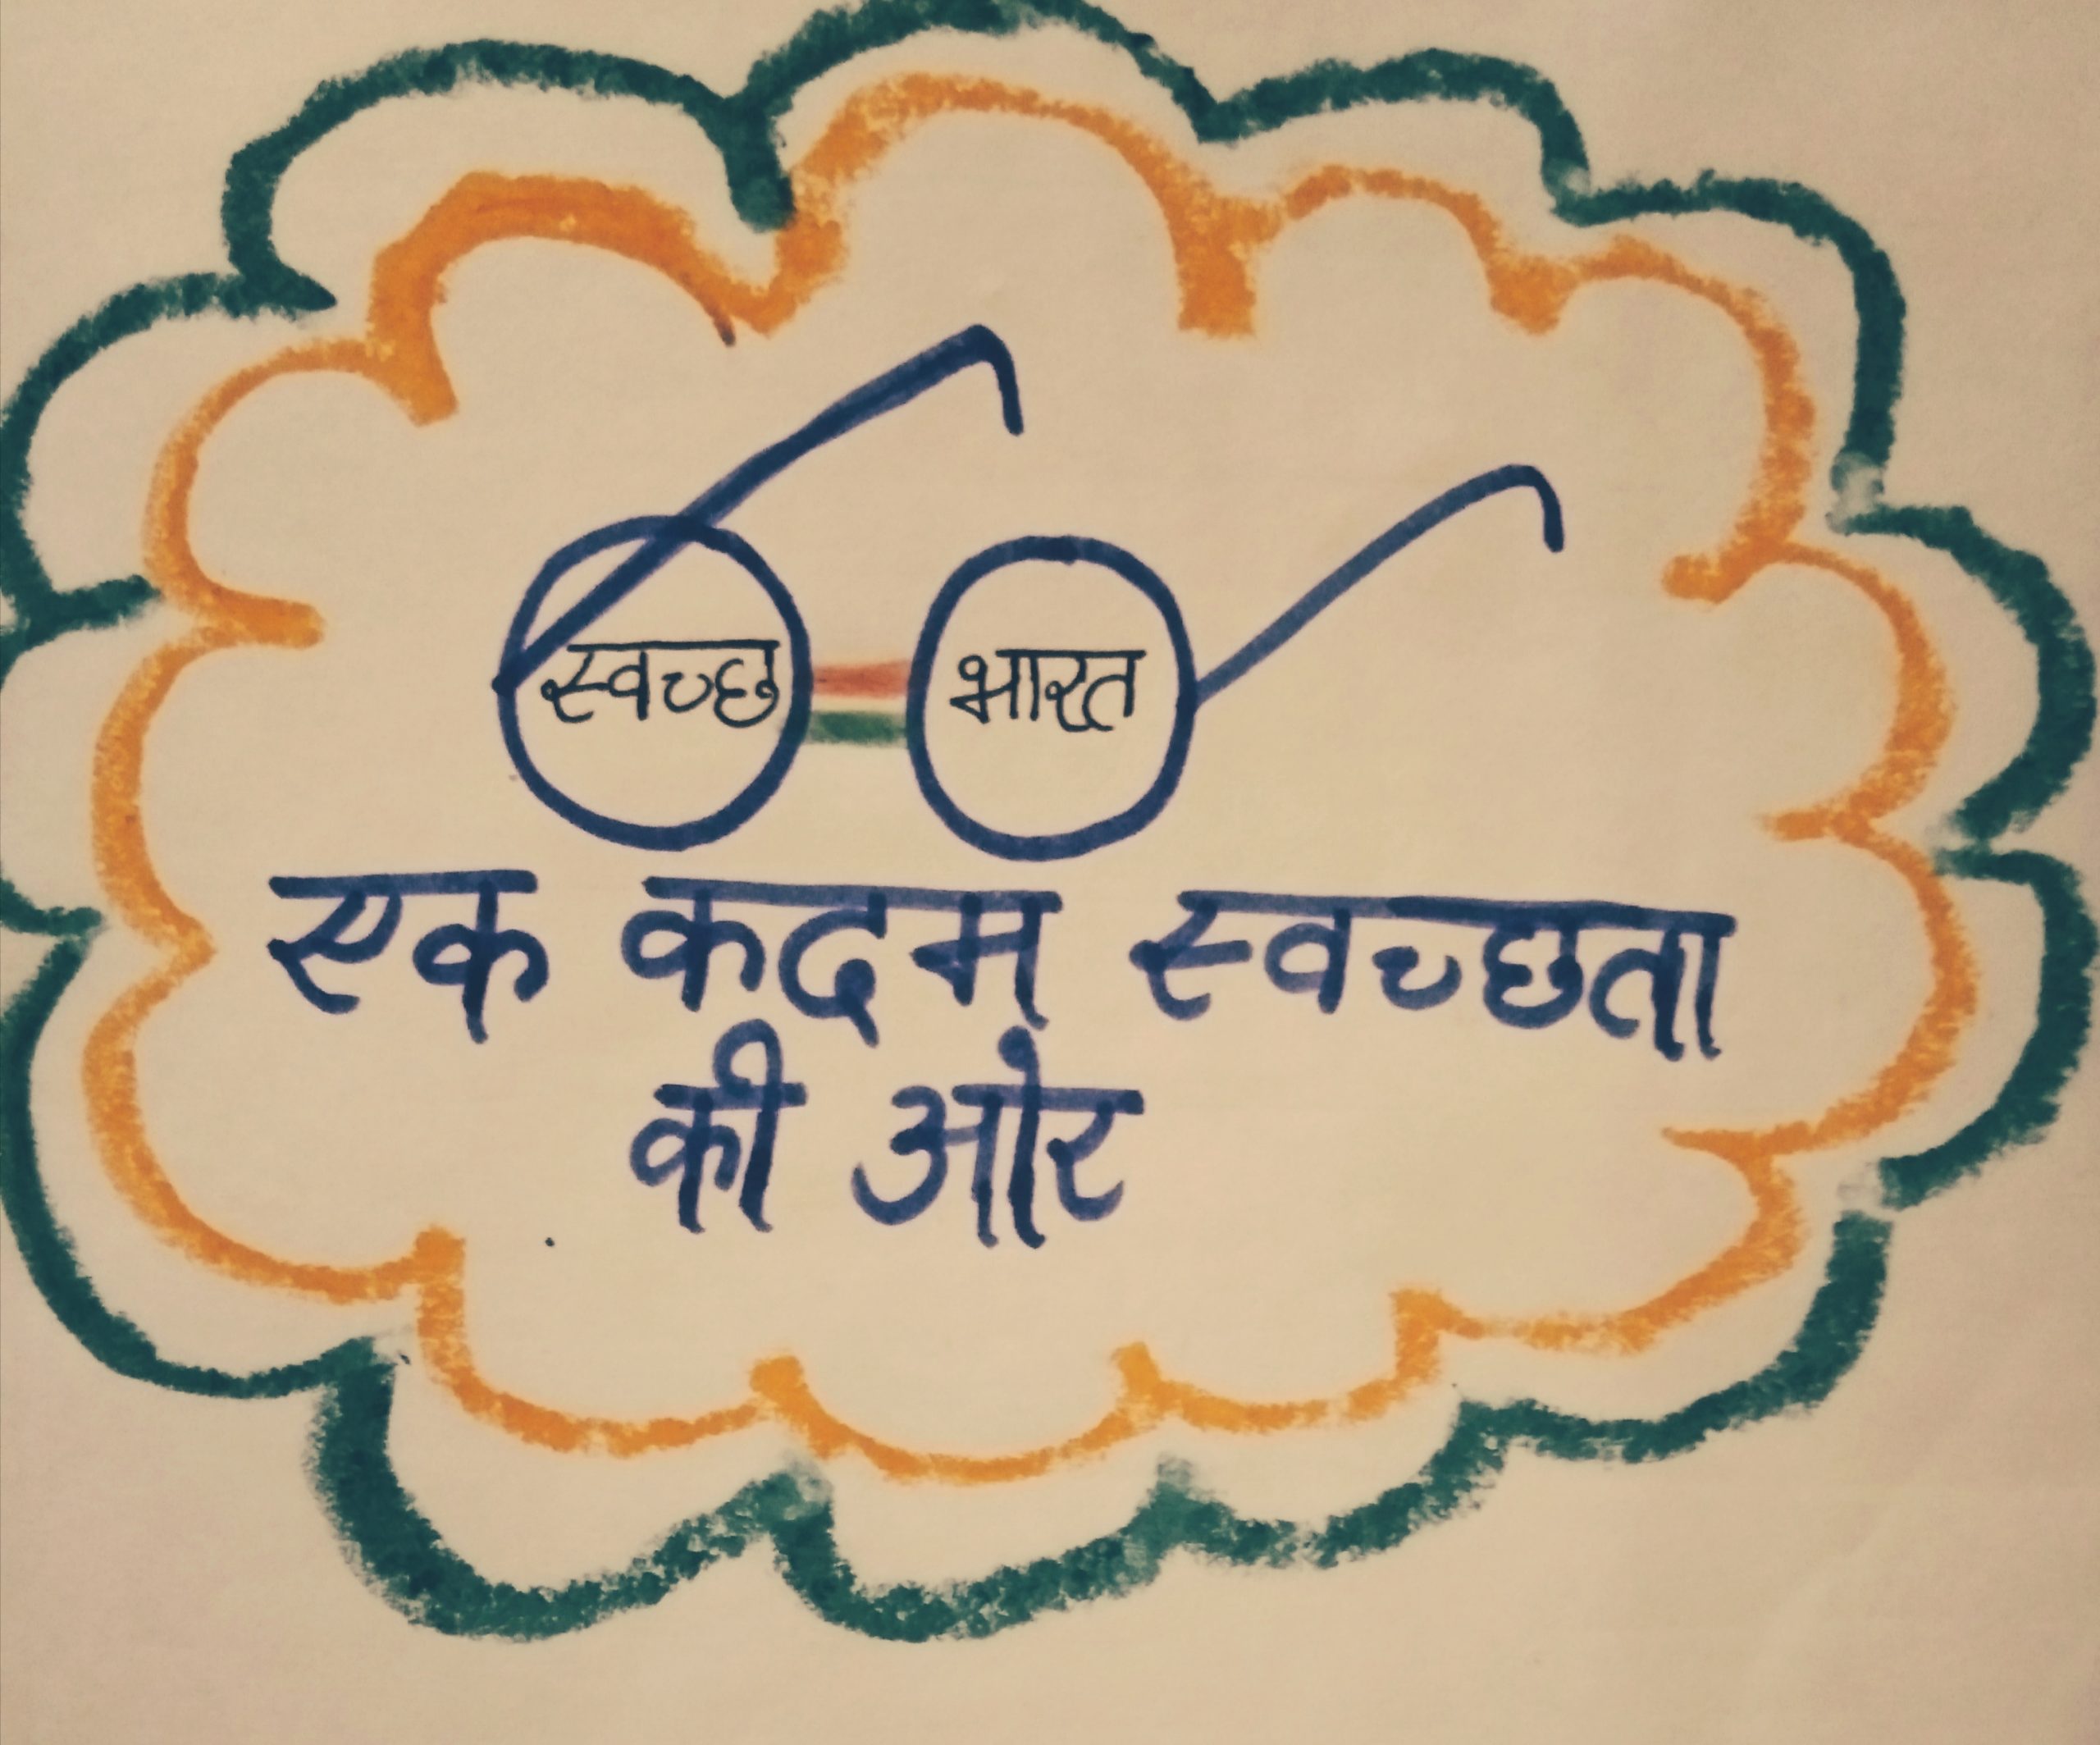 Swachh Bharat mission drawing/ clean India drawing/ परिसराची स्वच्छता  करणारी मुले... - YouTube